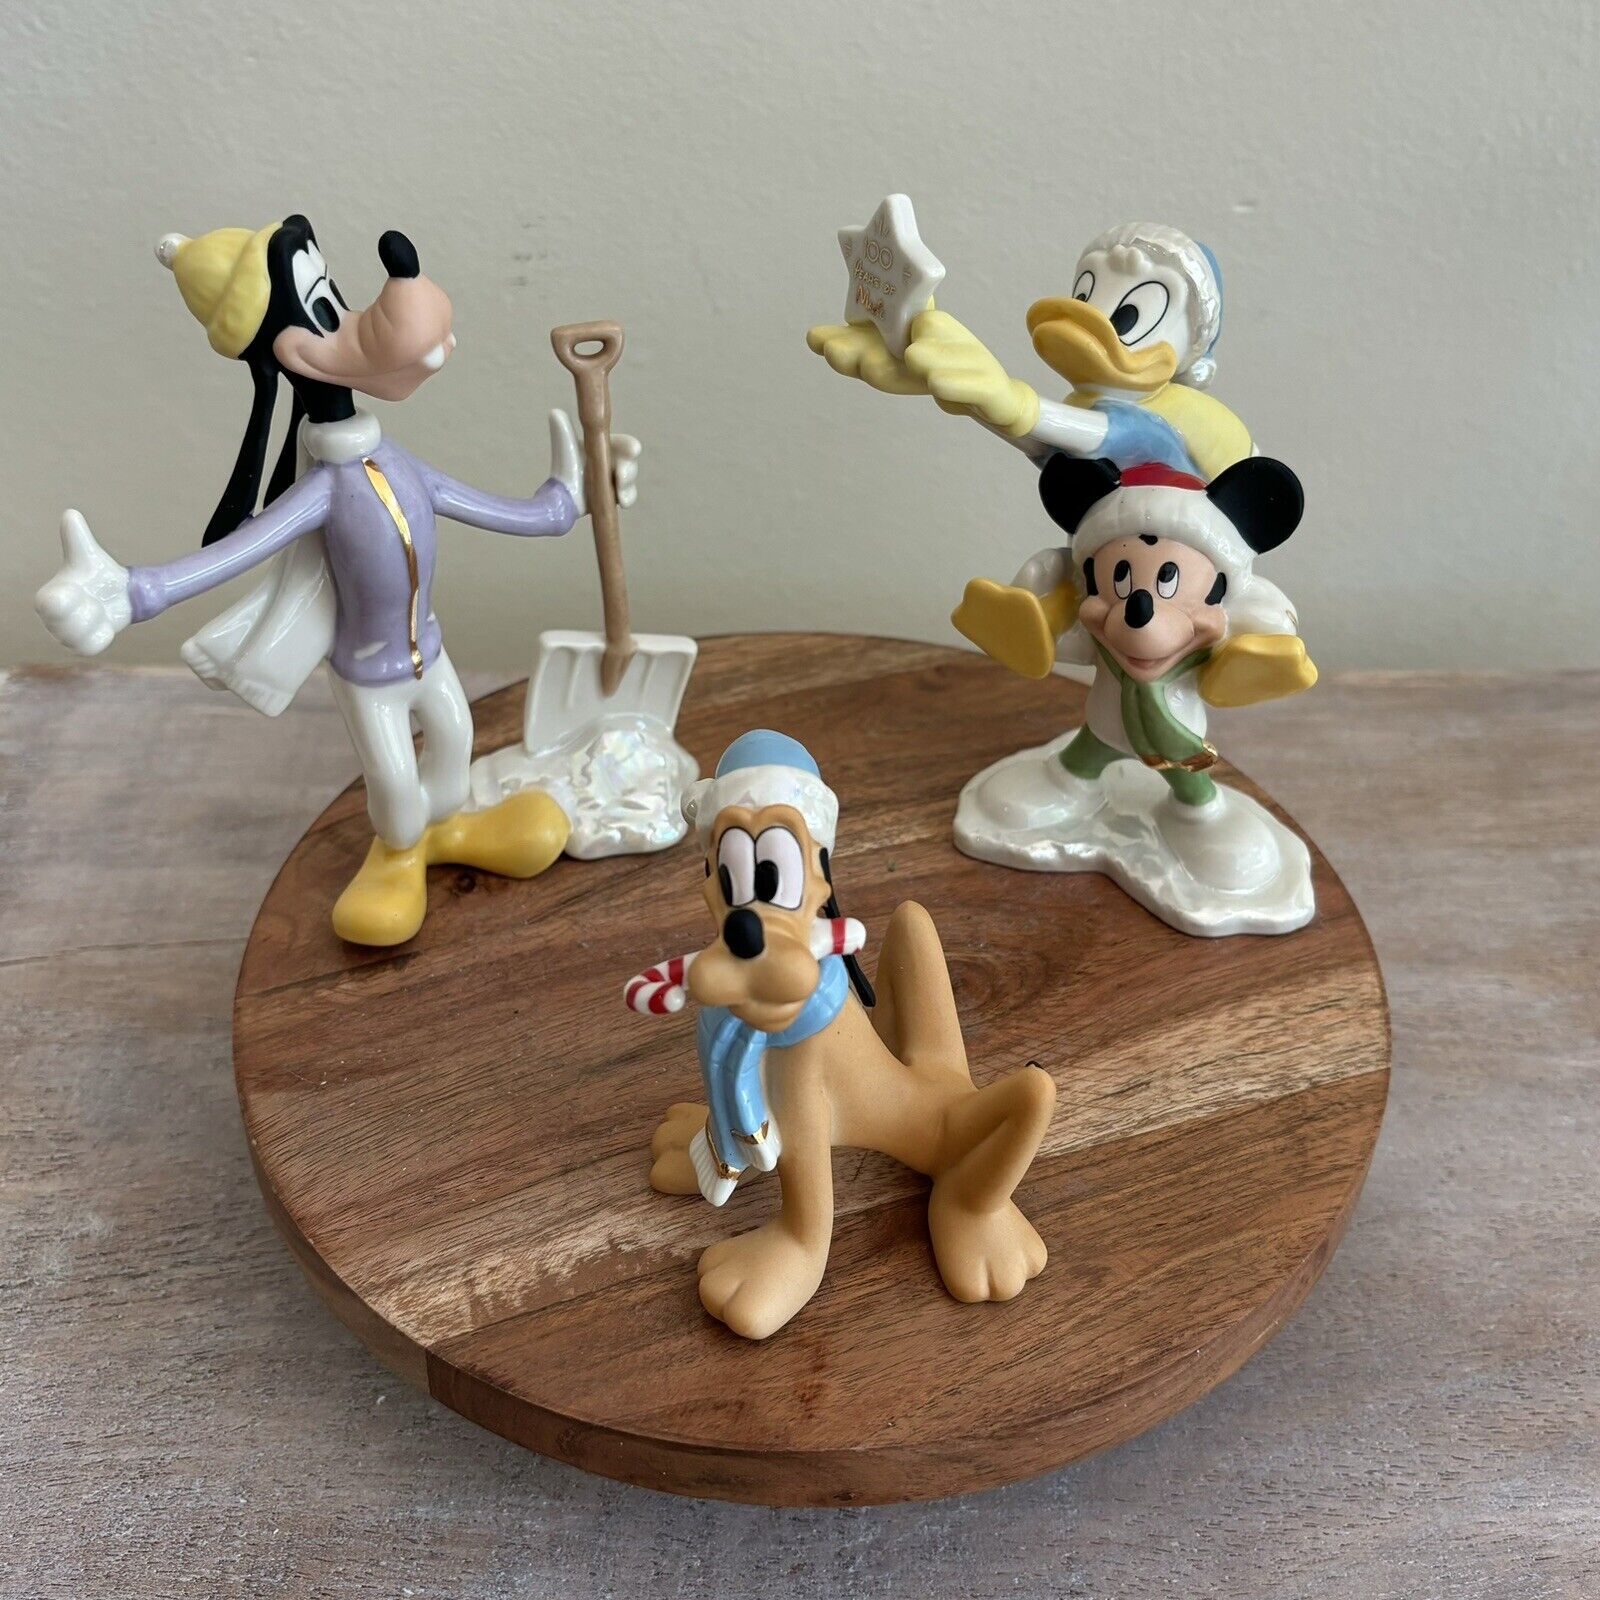 LENOX Disney 100th Anniversary Figurines, Set of 3 Mickey Pluto Goofy Donald